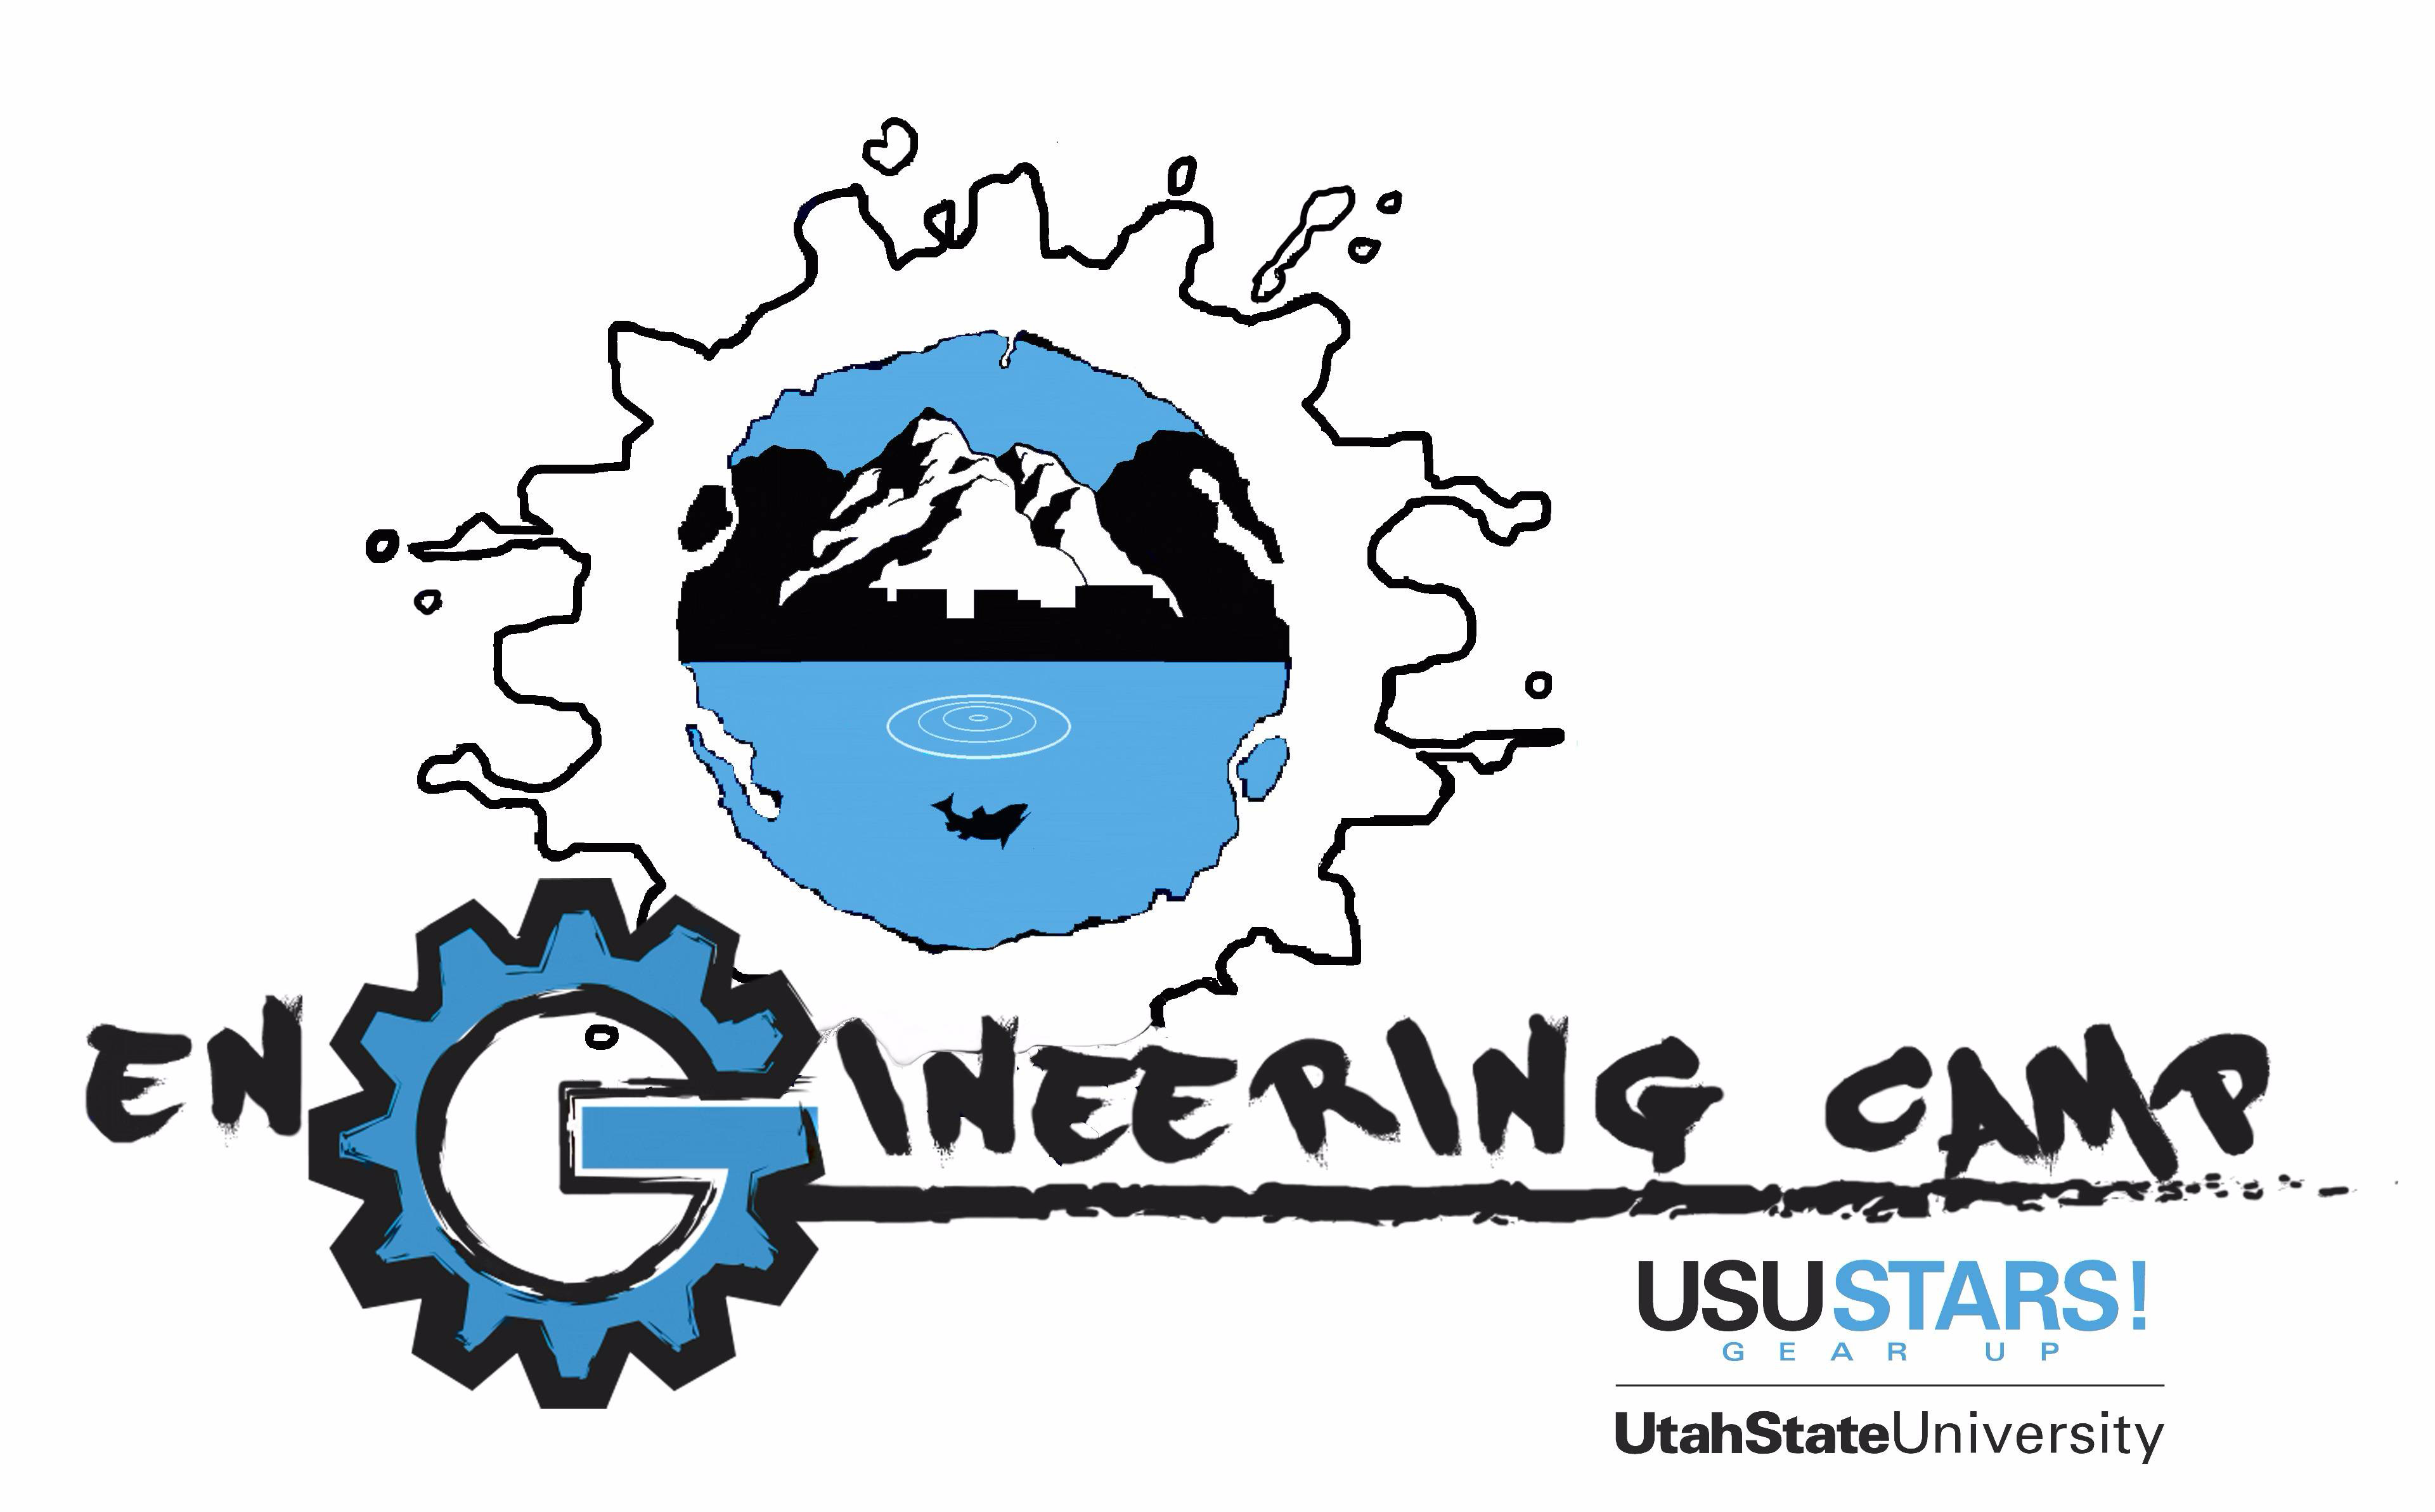 Engineering Camp USU Stars Gear up Logo